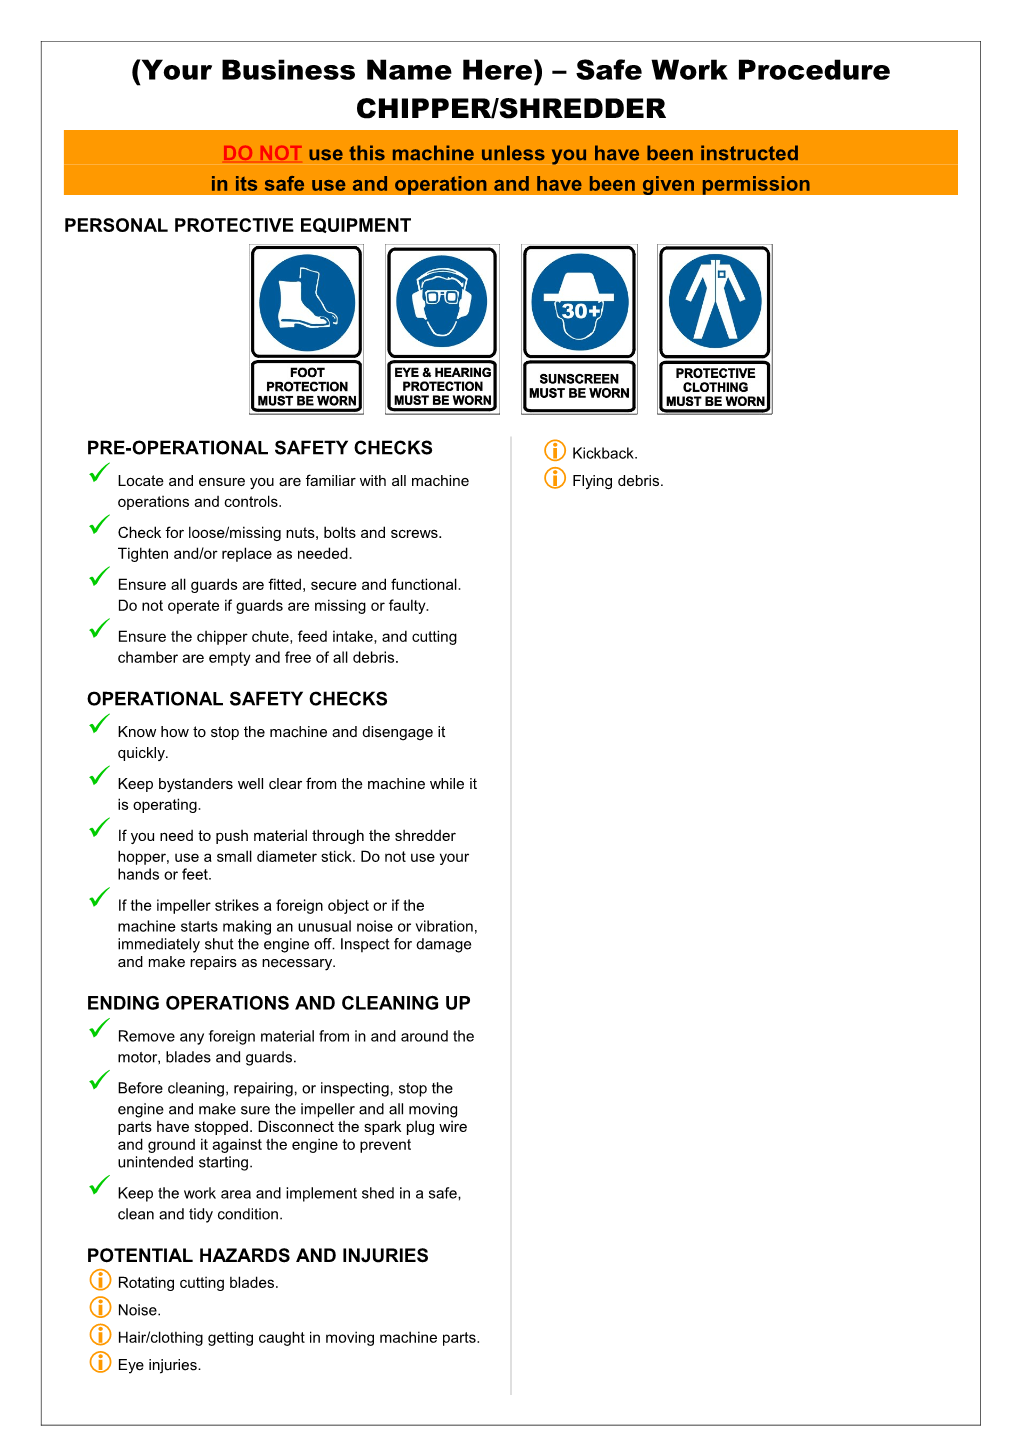 Safety Operating Procedures - Chipper/Shredder